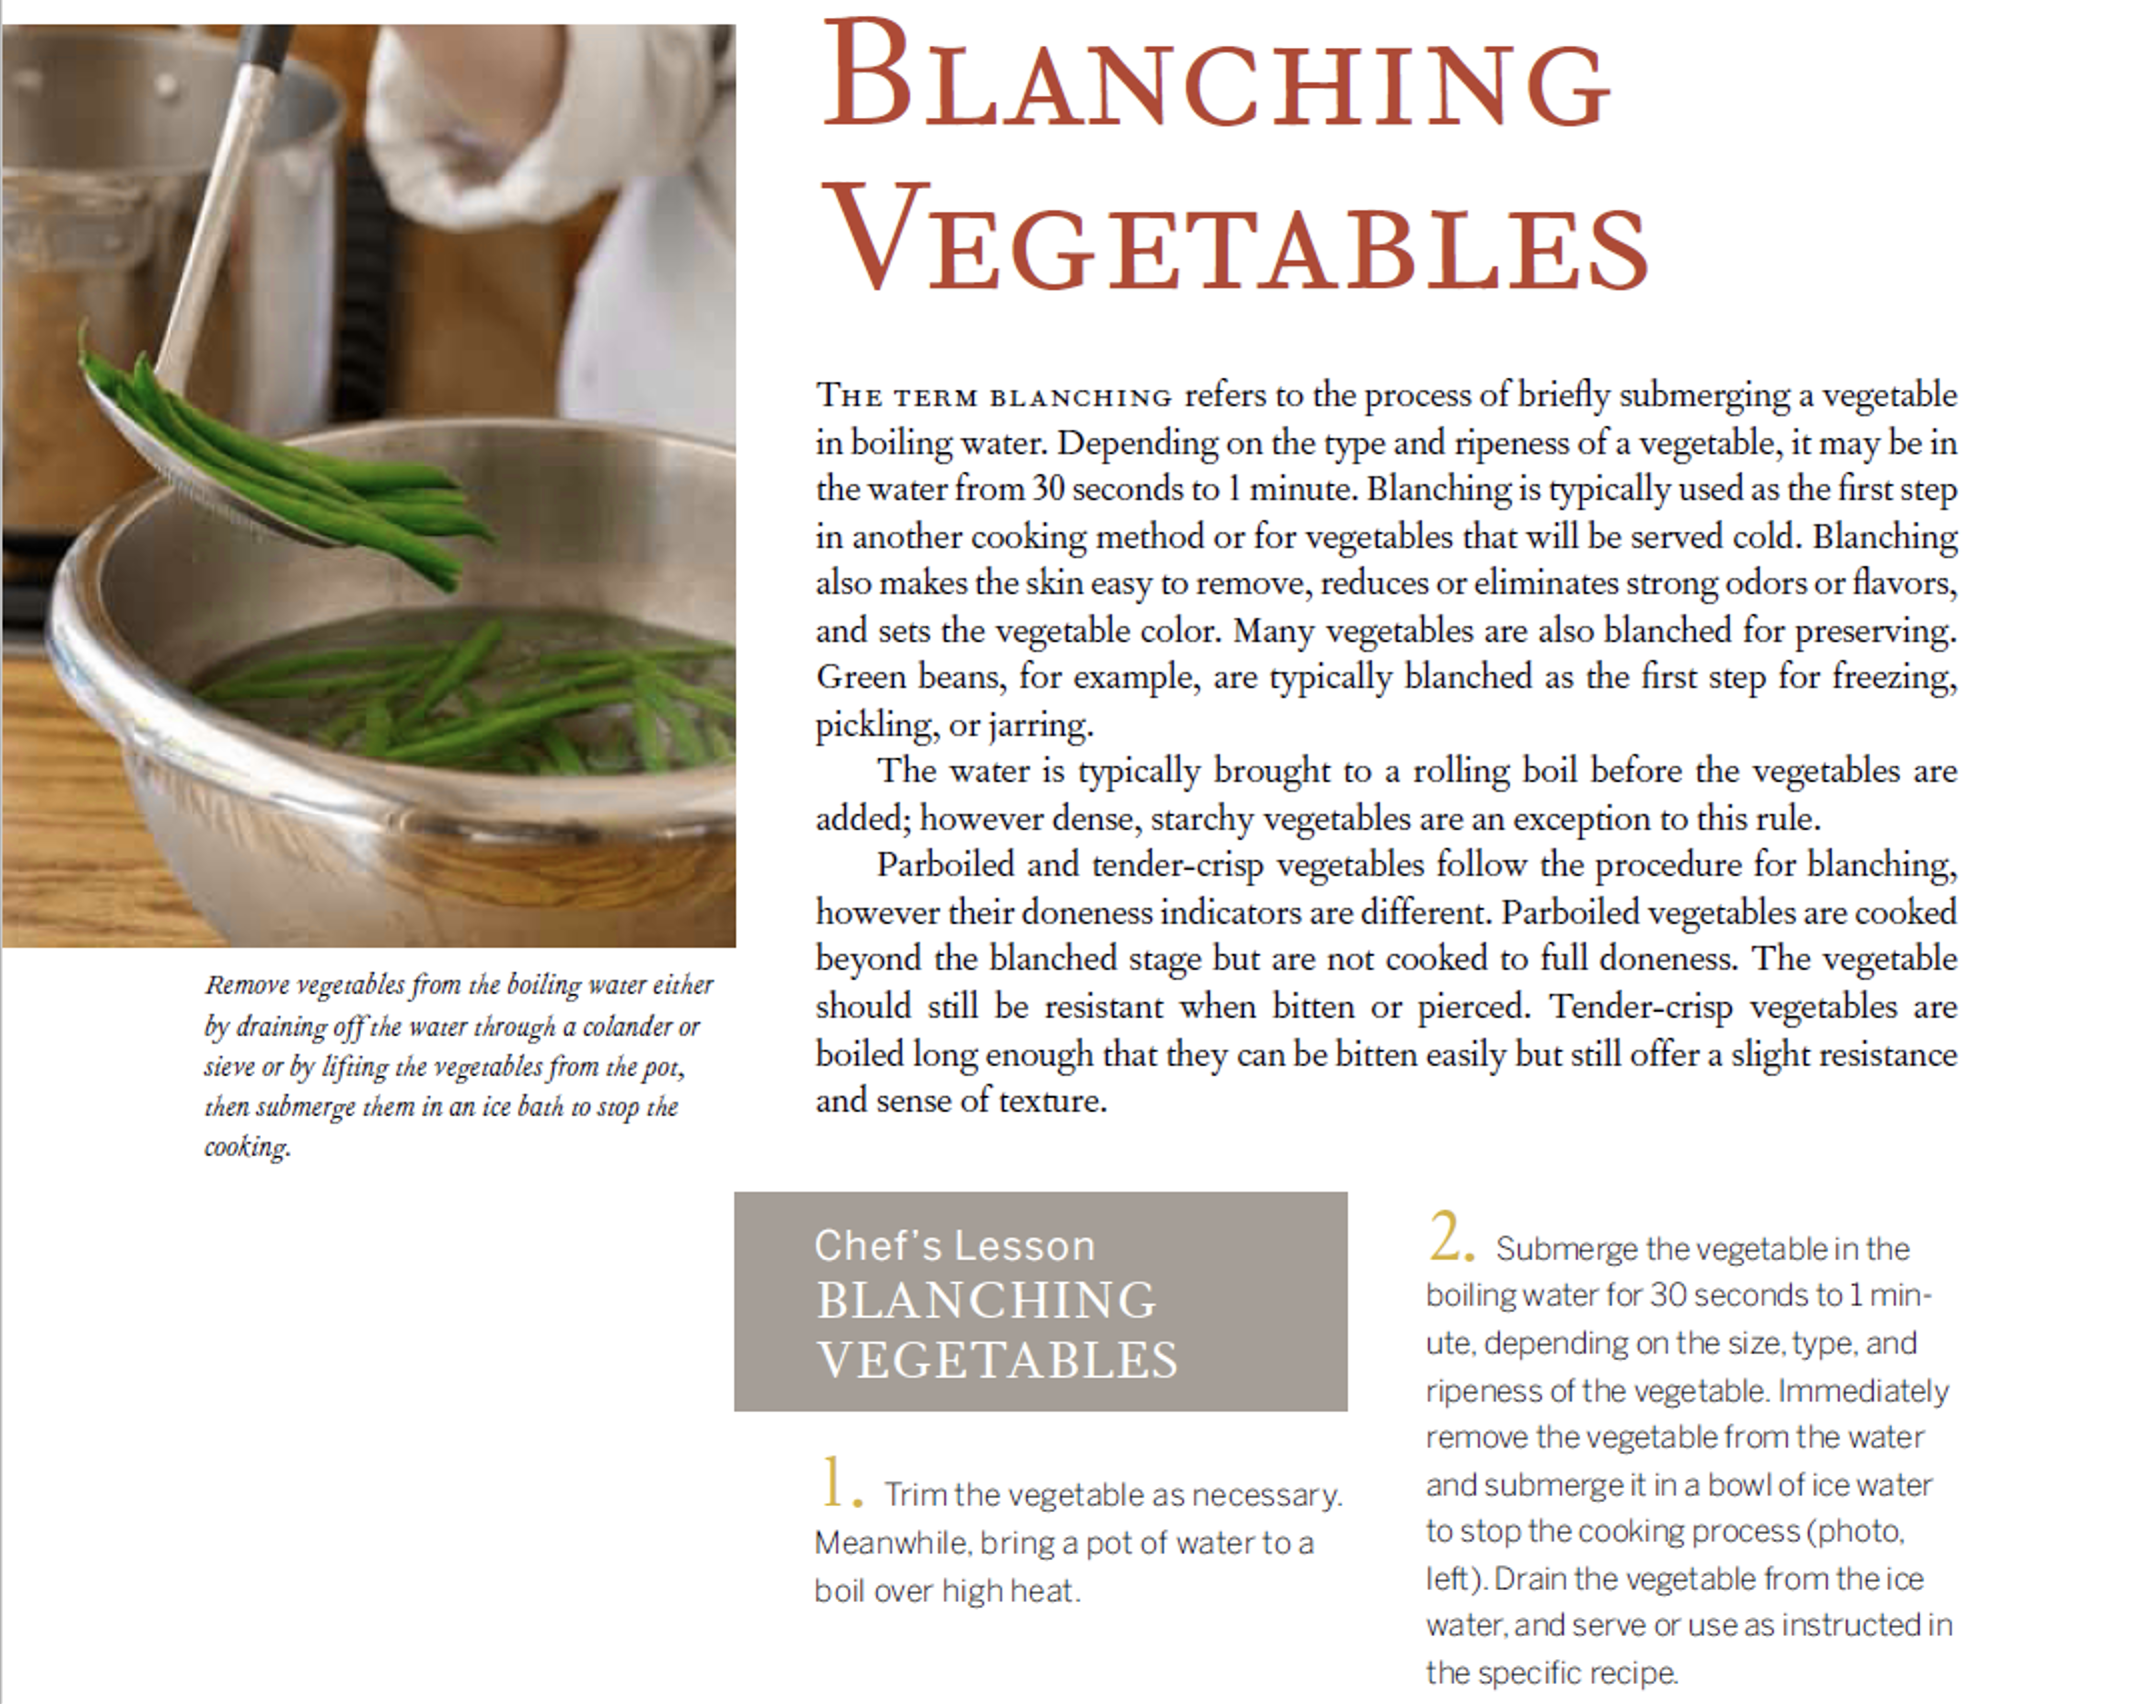 Blanching vegetables